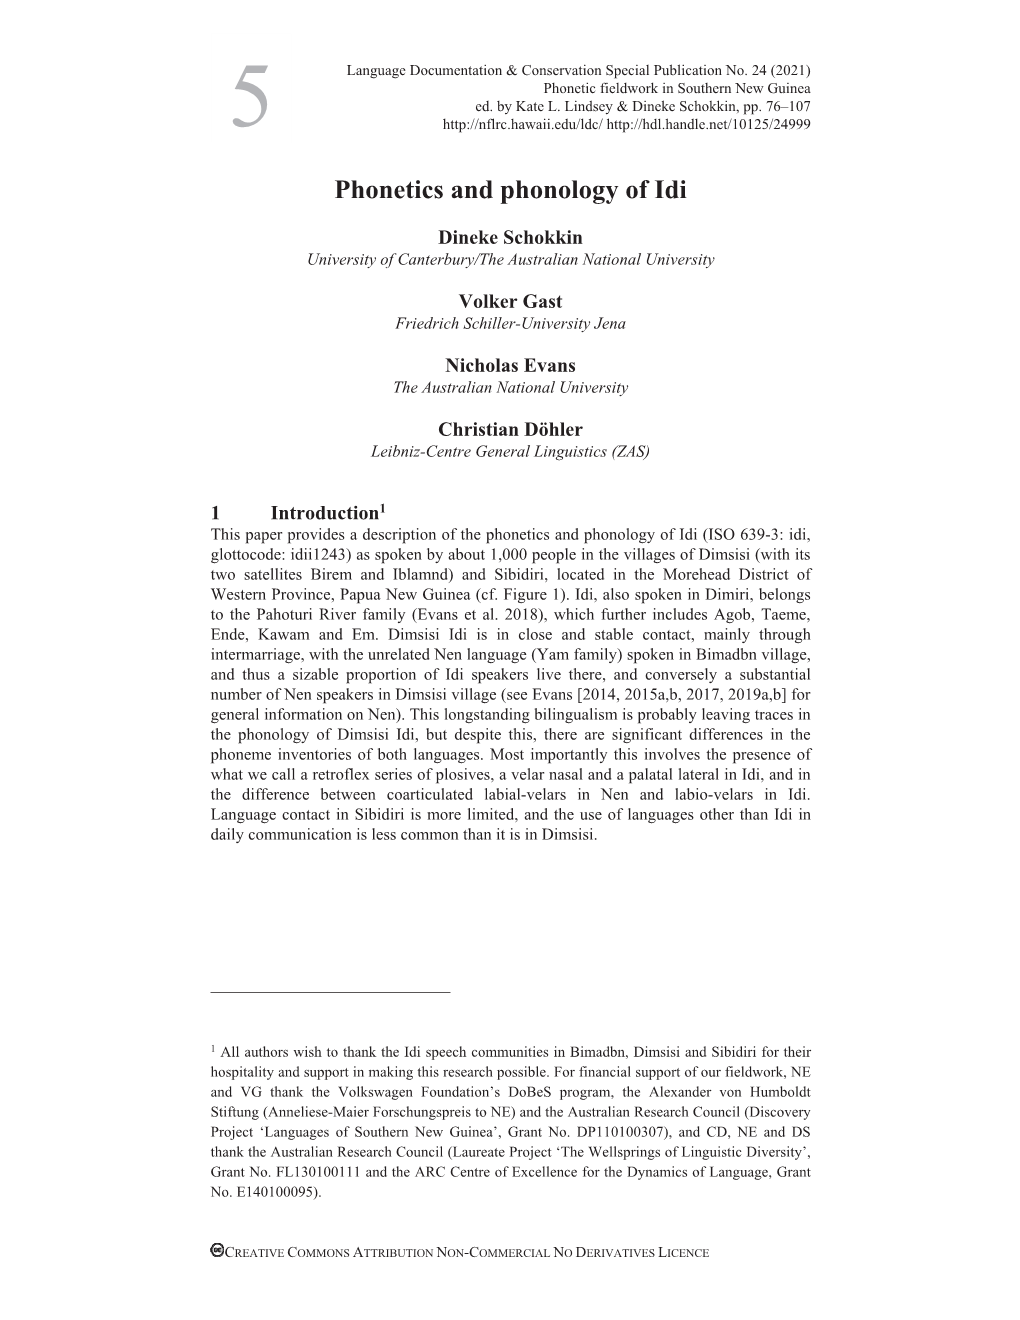 Phonetics and Phonology of Idi